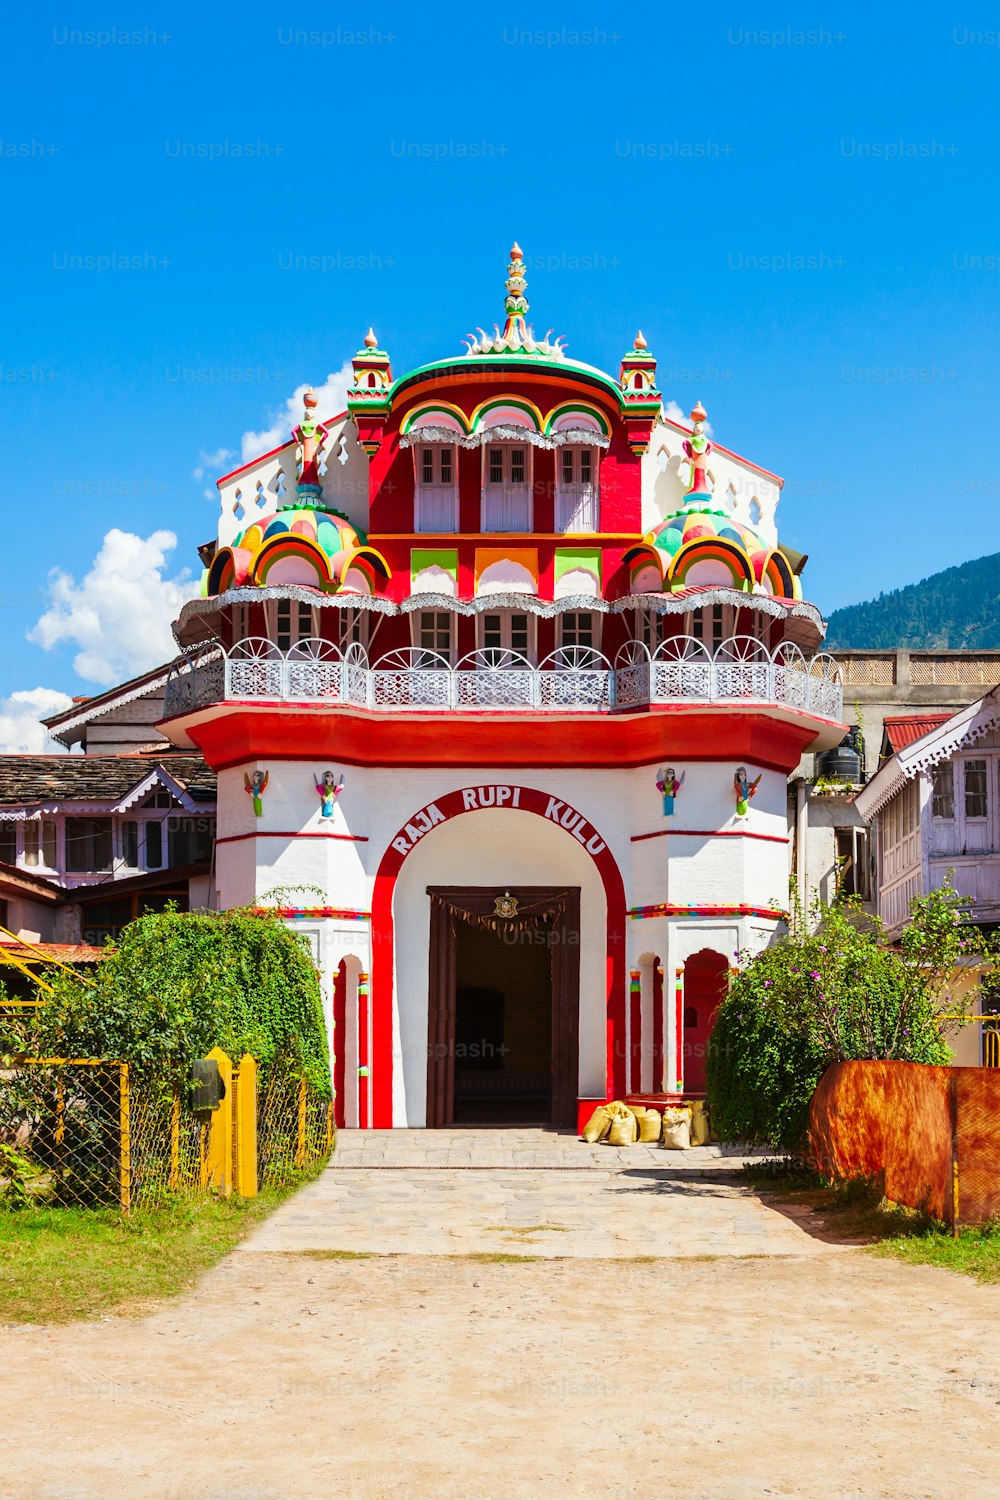 Raja Rupi Palast in der Stadt Kullu im indischen Bundesstaat Himachal Pradesh